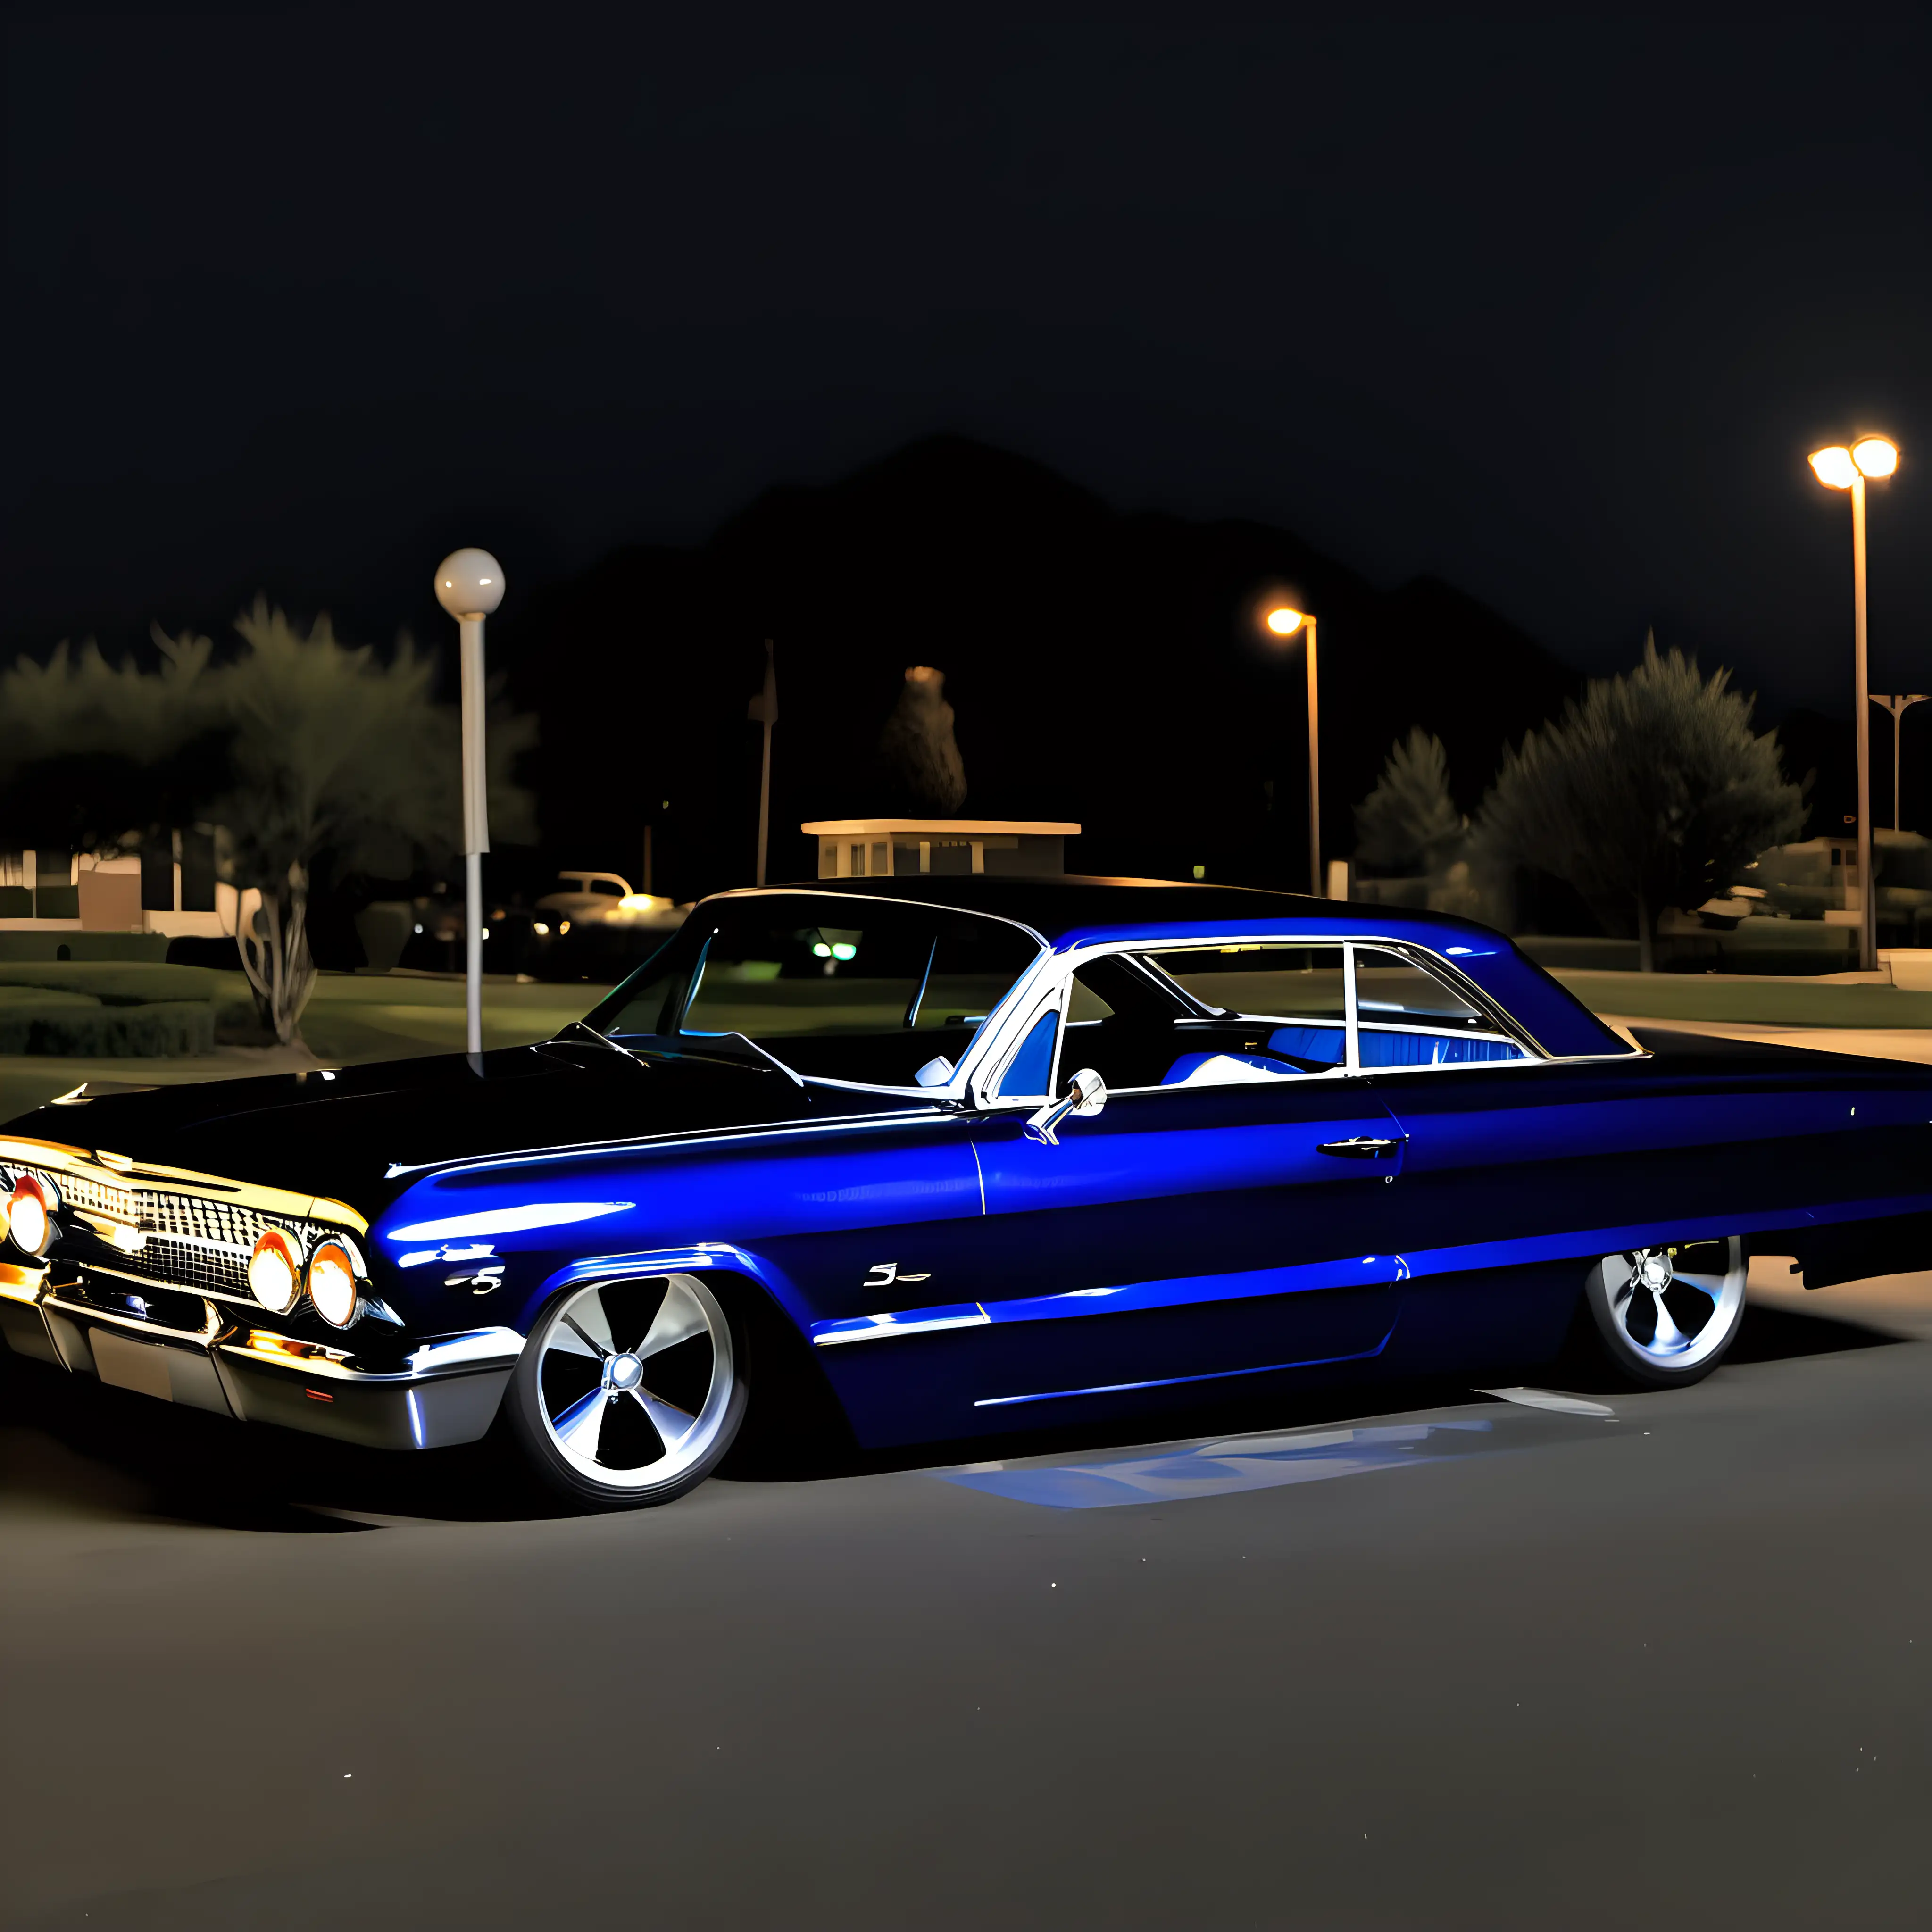 custom1963 Chevrolet SS impala, dark blue paint, mag wheels, parked at midnight.